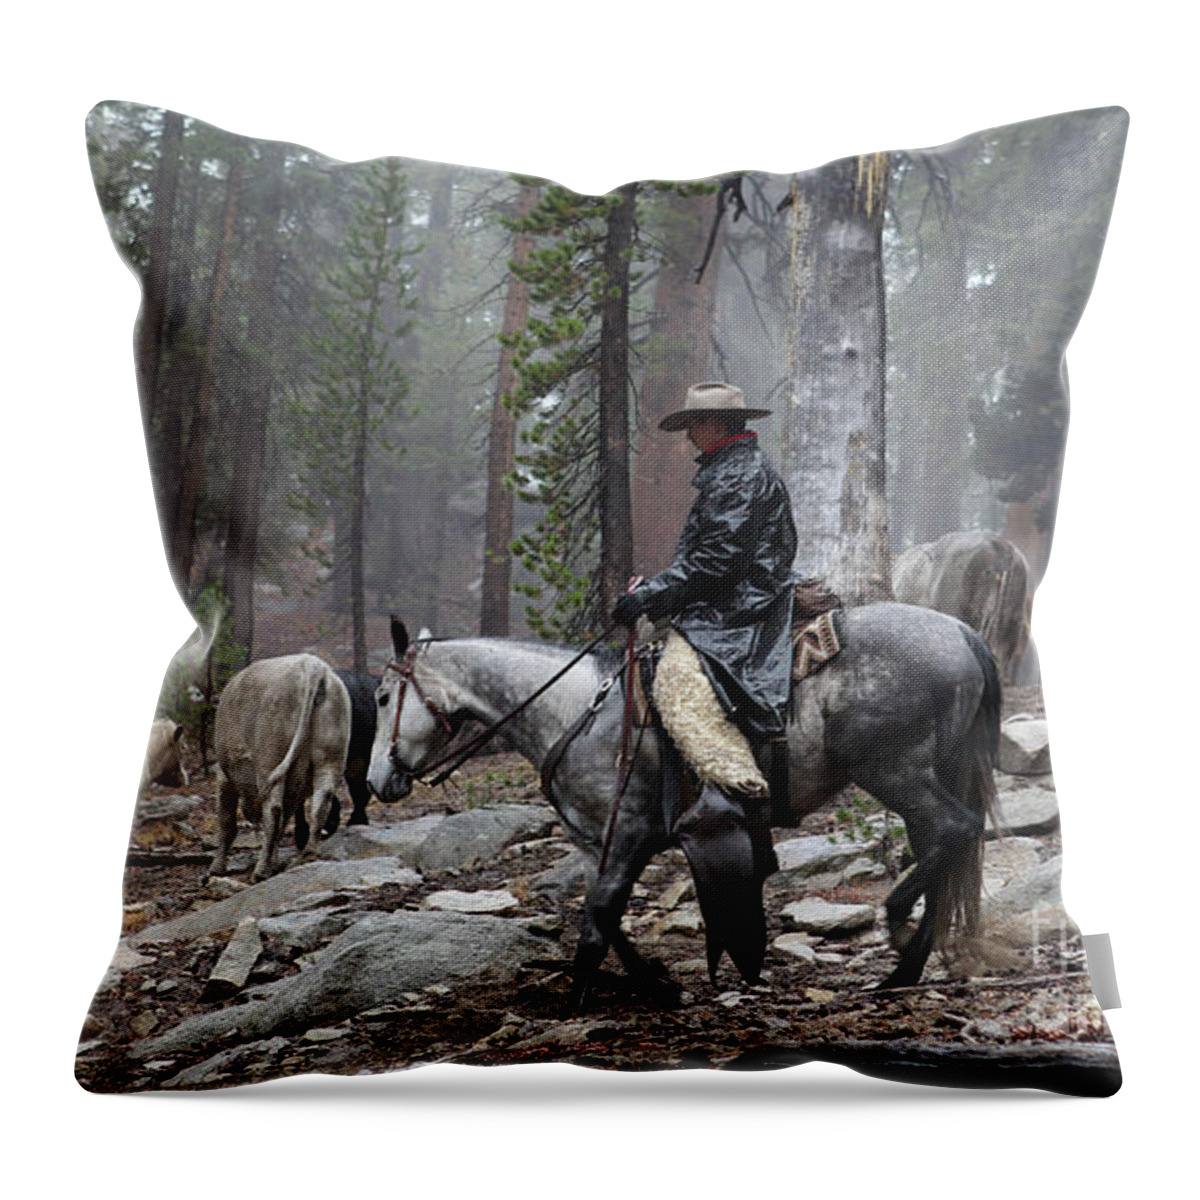 Cowboy Throw Pillow featuring the photograph Rain Riding by Diane Bohna